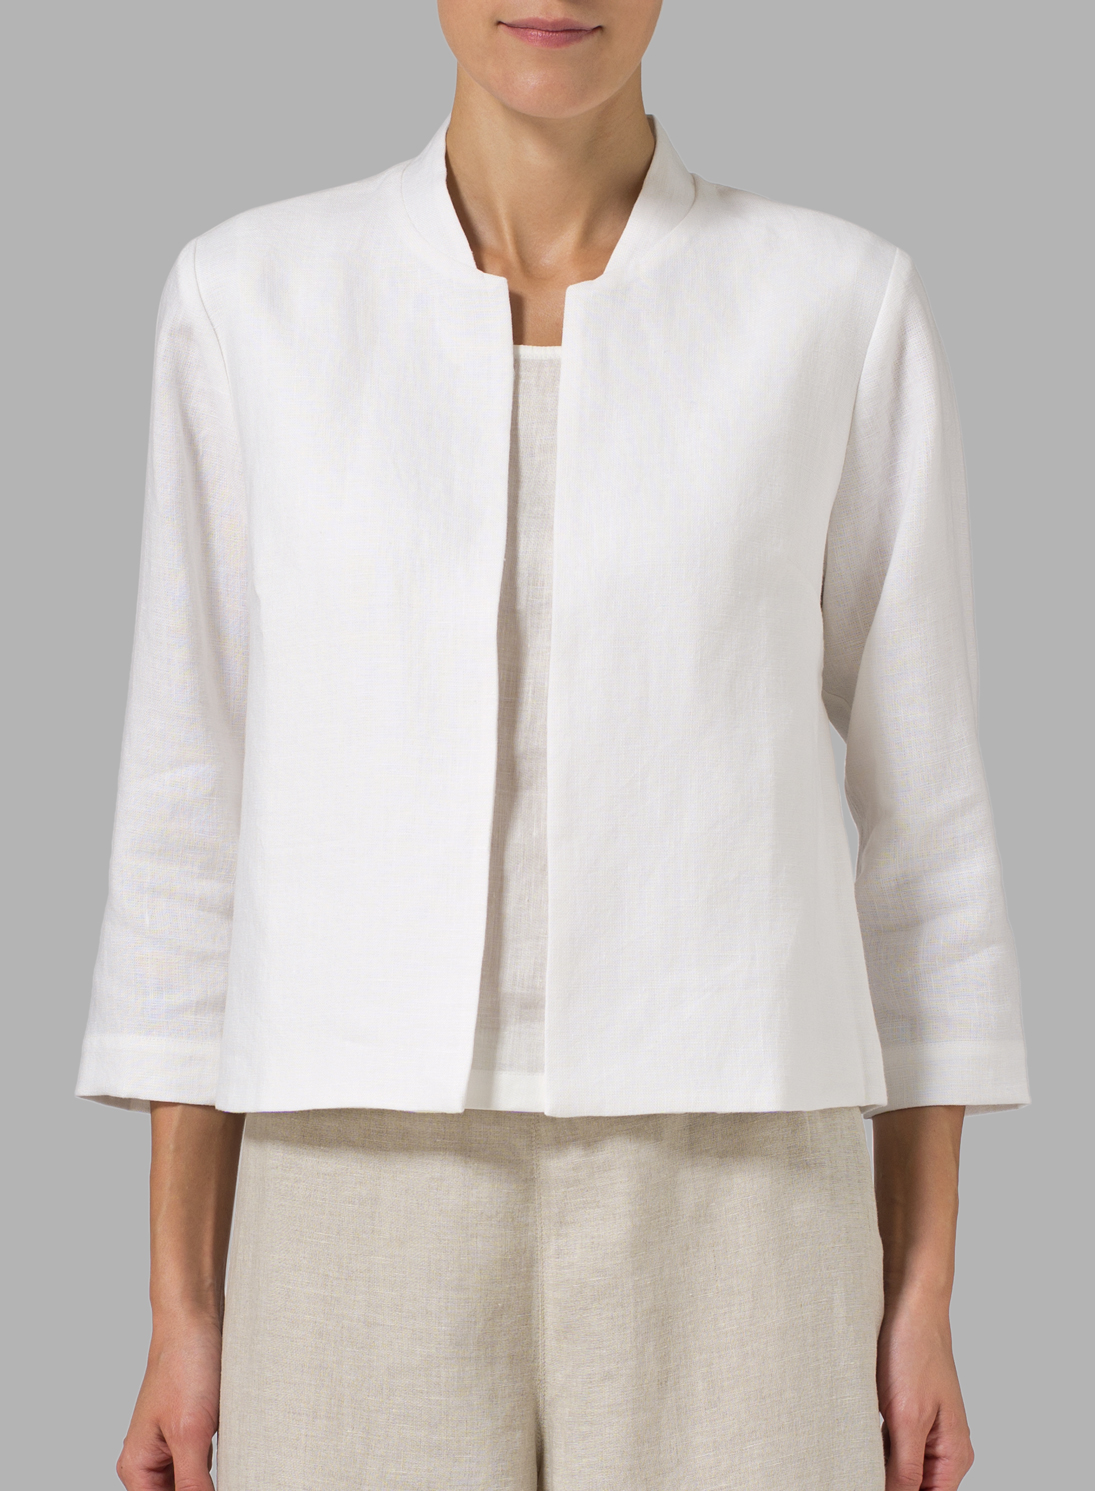 Cotton And Linen Waist Slim Fashion Short Jacket - boddysize